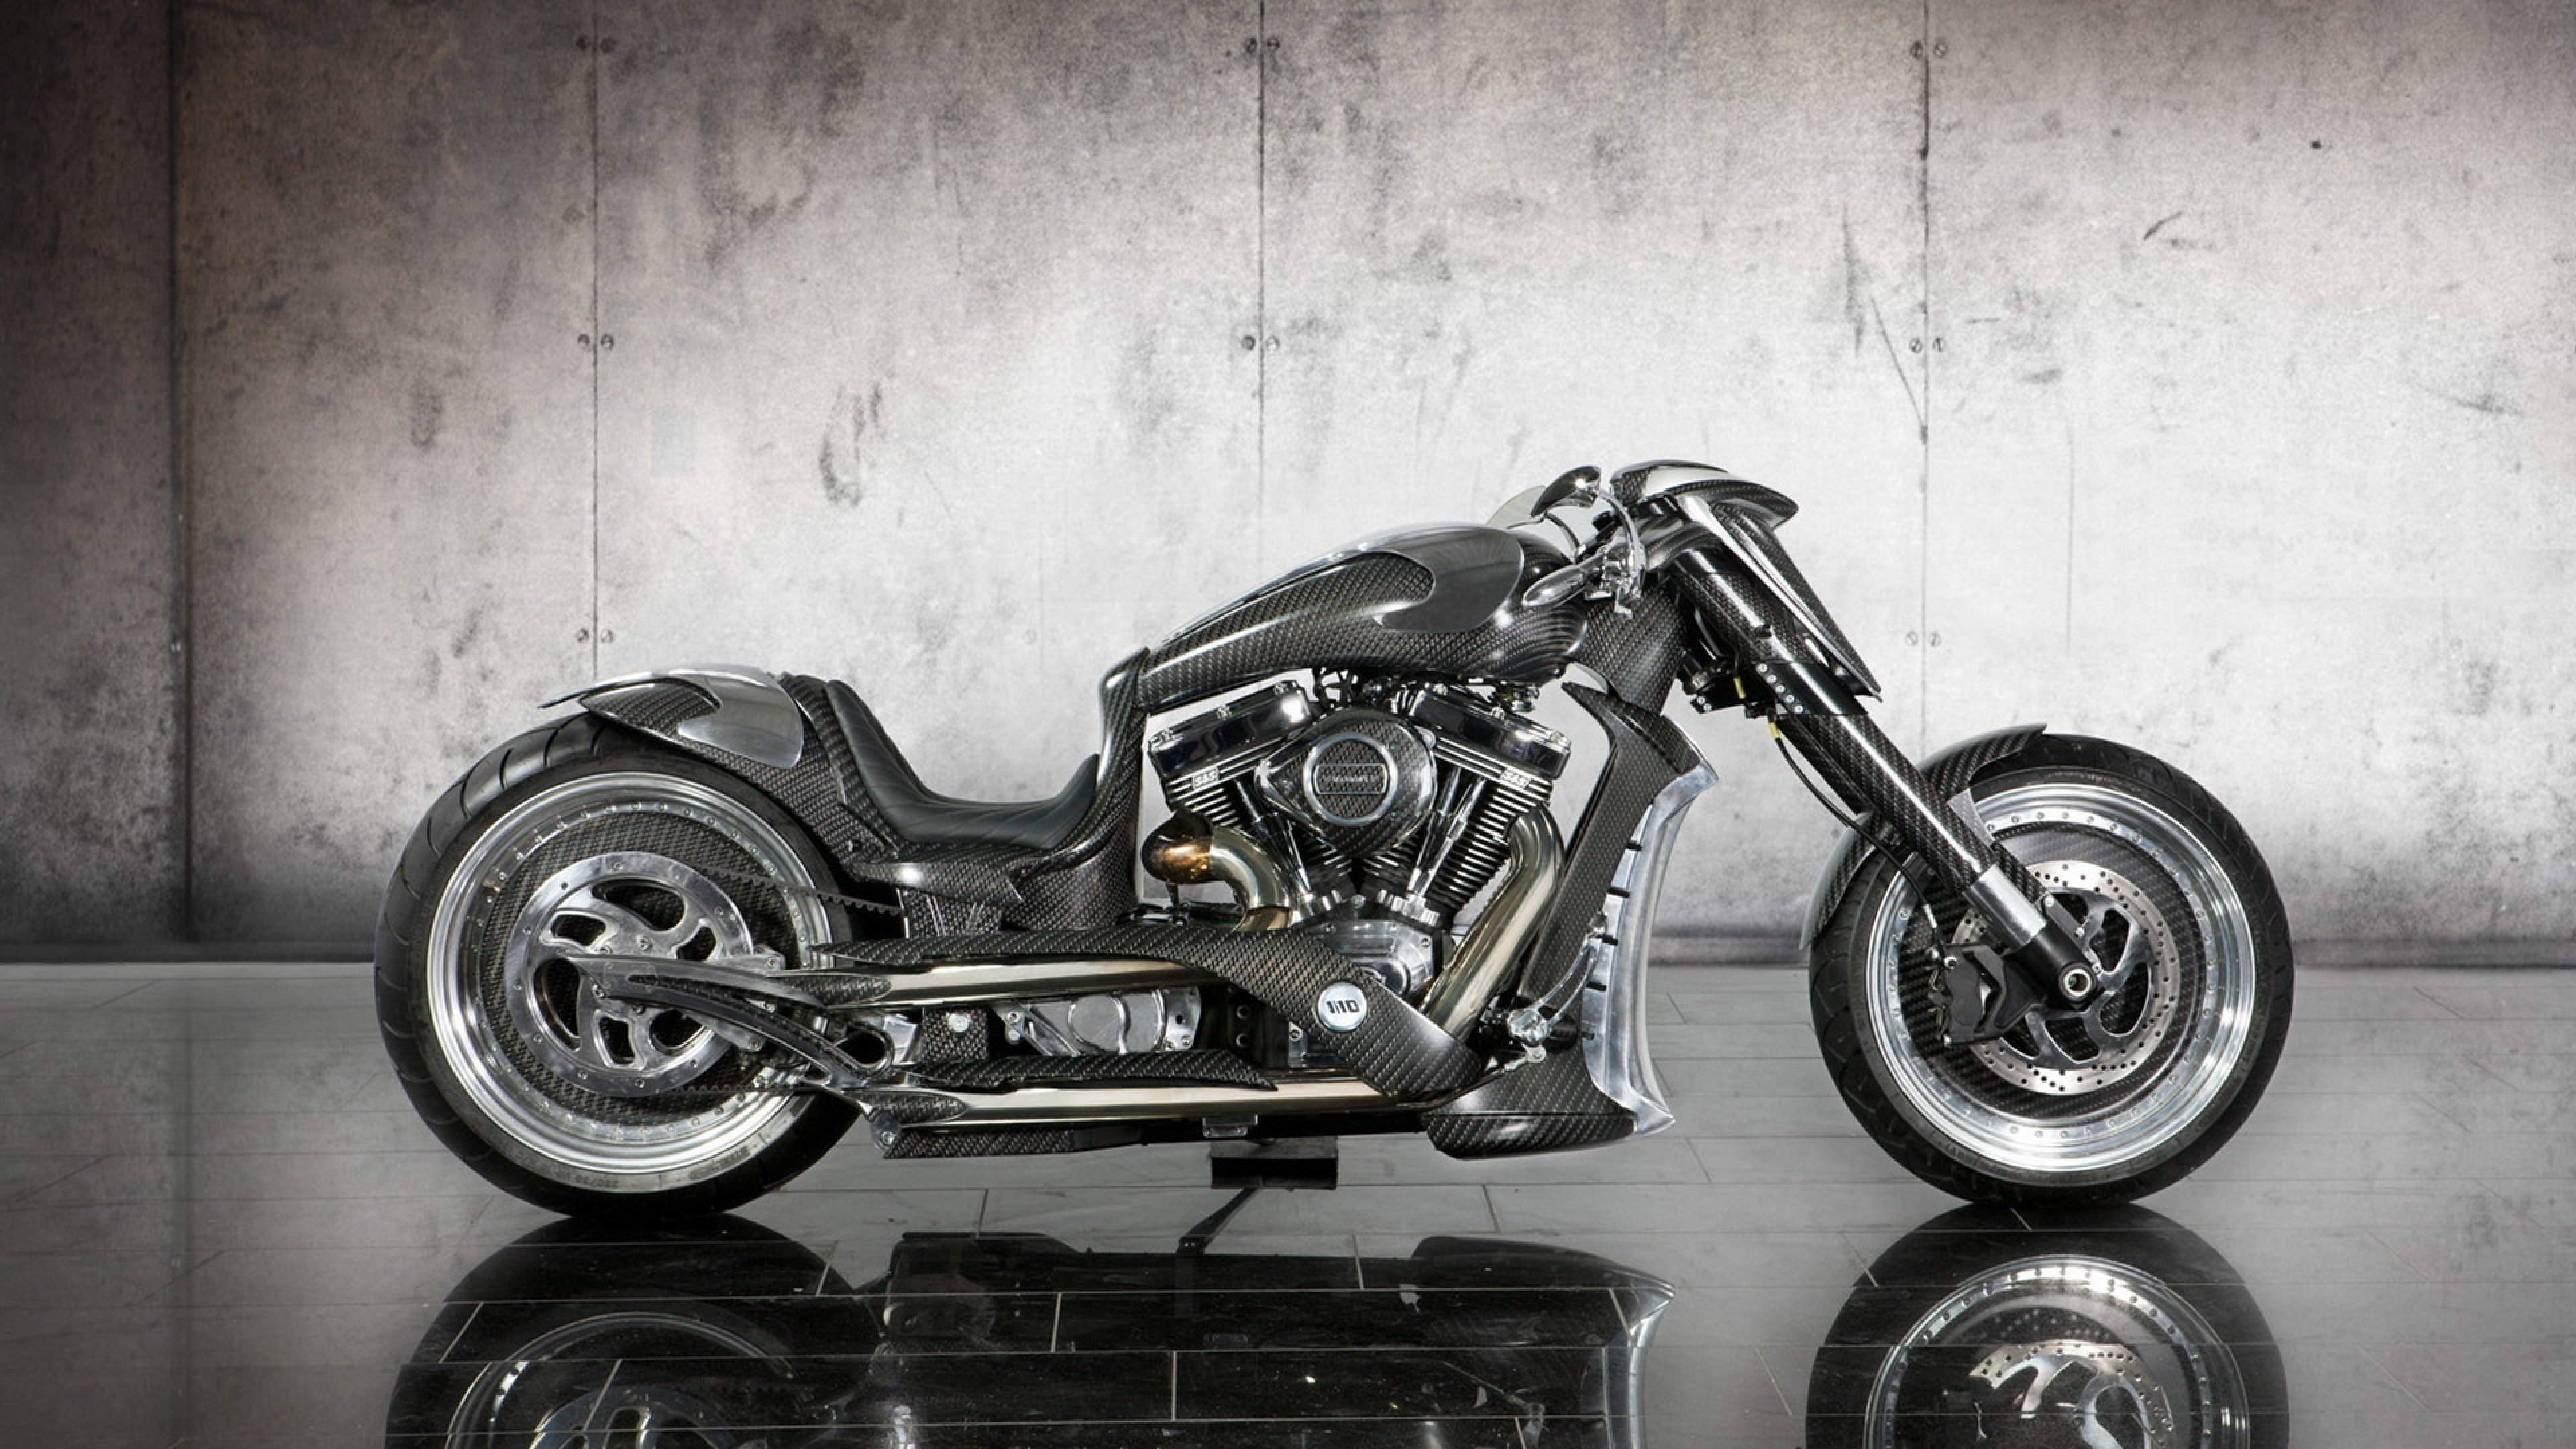 Download Wallpaper 3840x2160 mansory zapico custom bike motorcycle